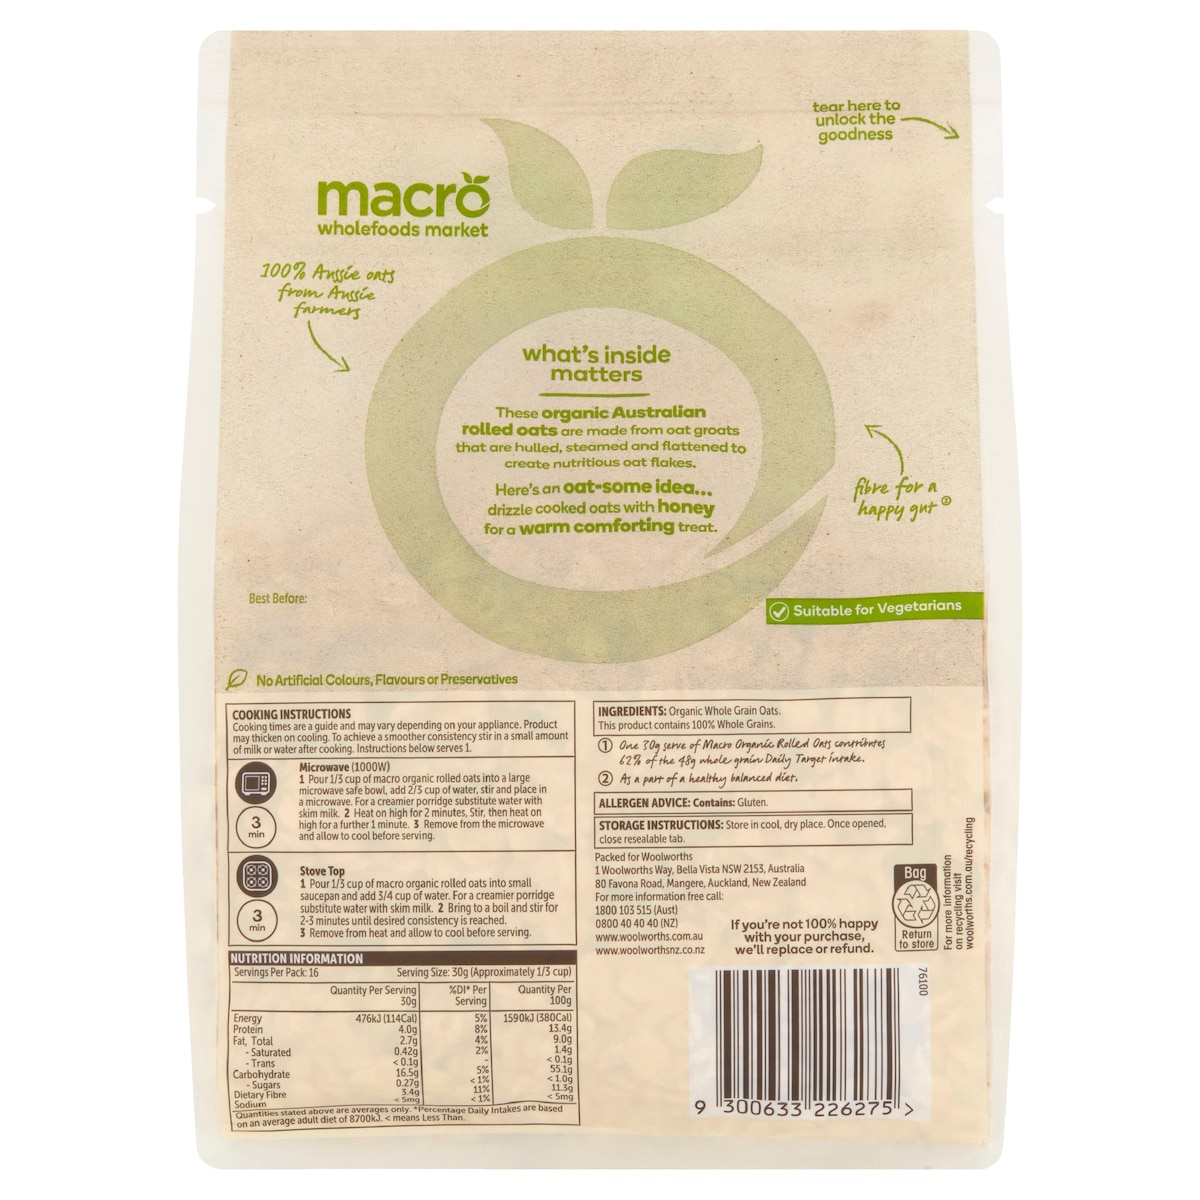 Macro Organic Oats Rolled 500g